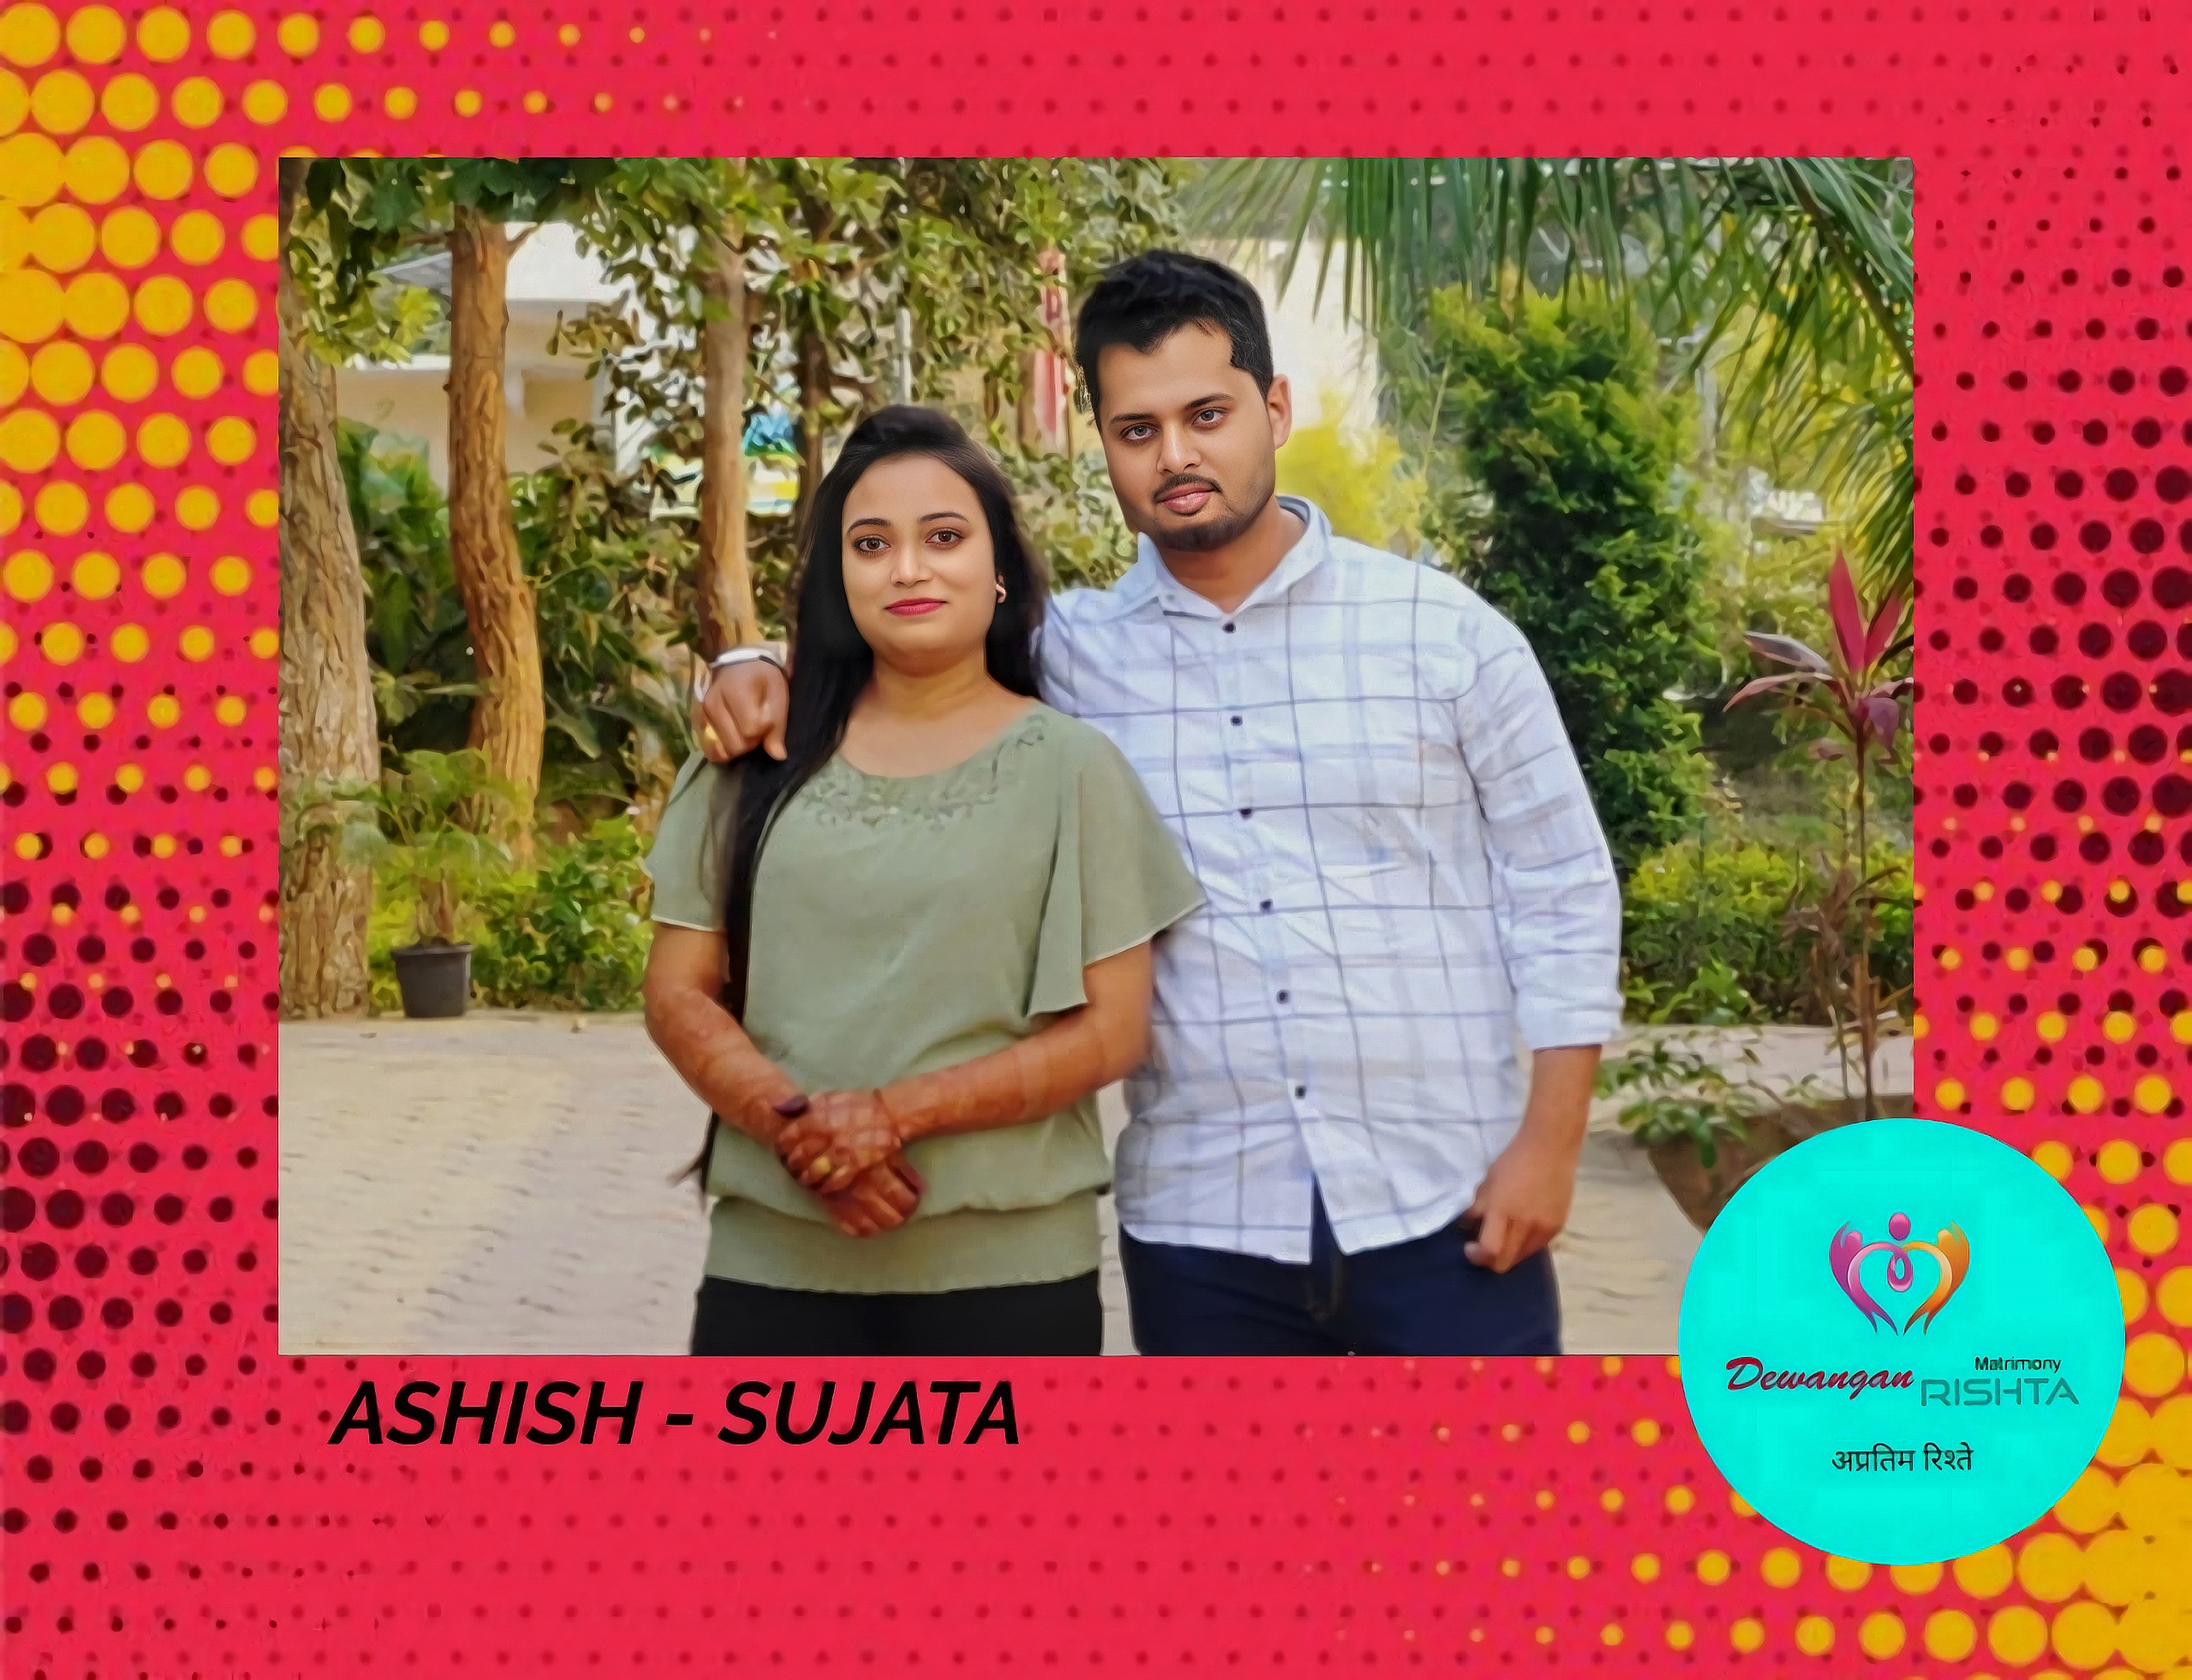 Sujata and Ashish